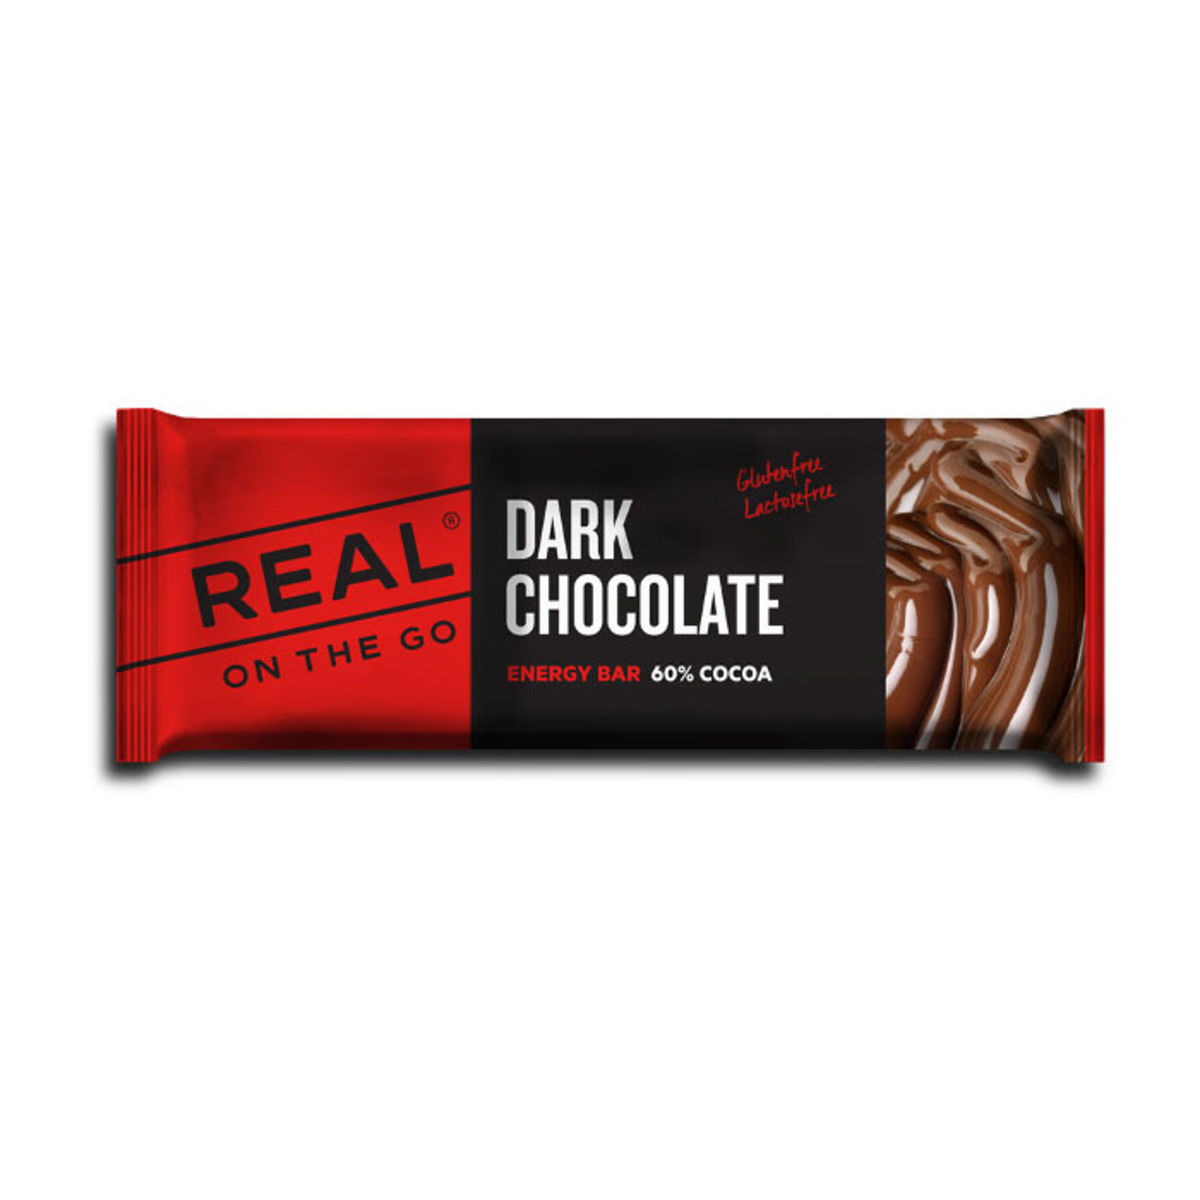 Dark chocolate 60% cocoa - 50g